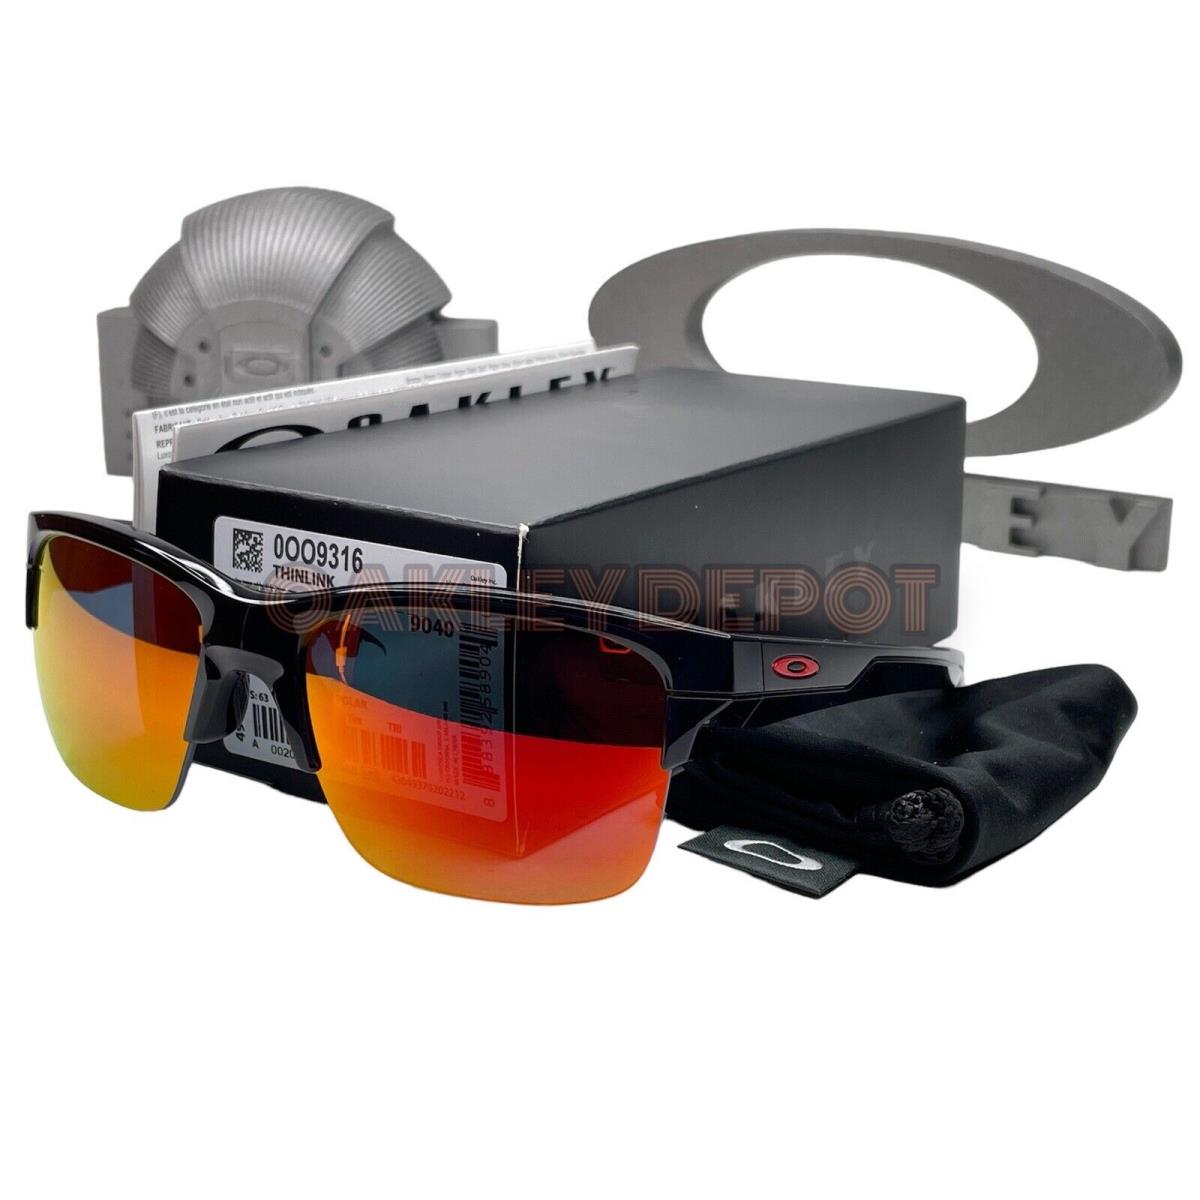 Oakley Thinlink 009316 Black Ink/ruby Iridium Polarized Sunglasses 213 - Frame: BLACK INK, Lens: